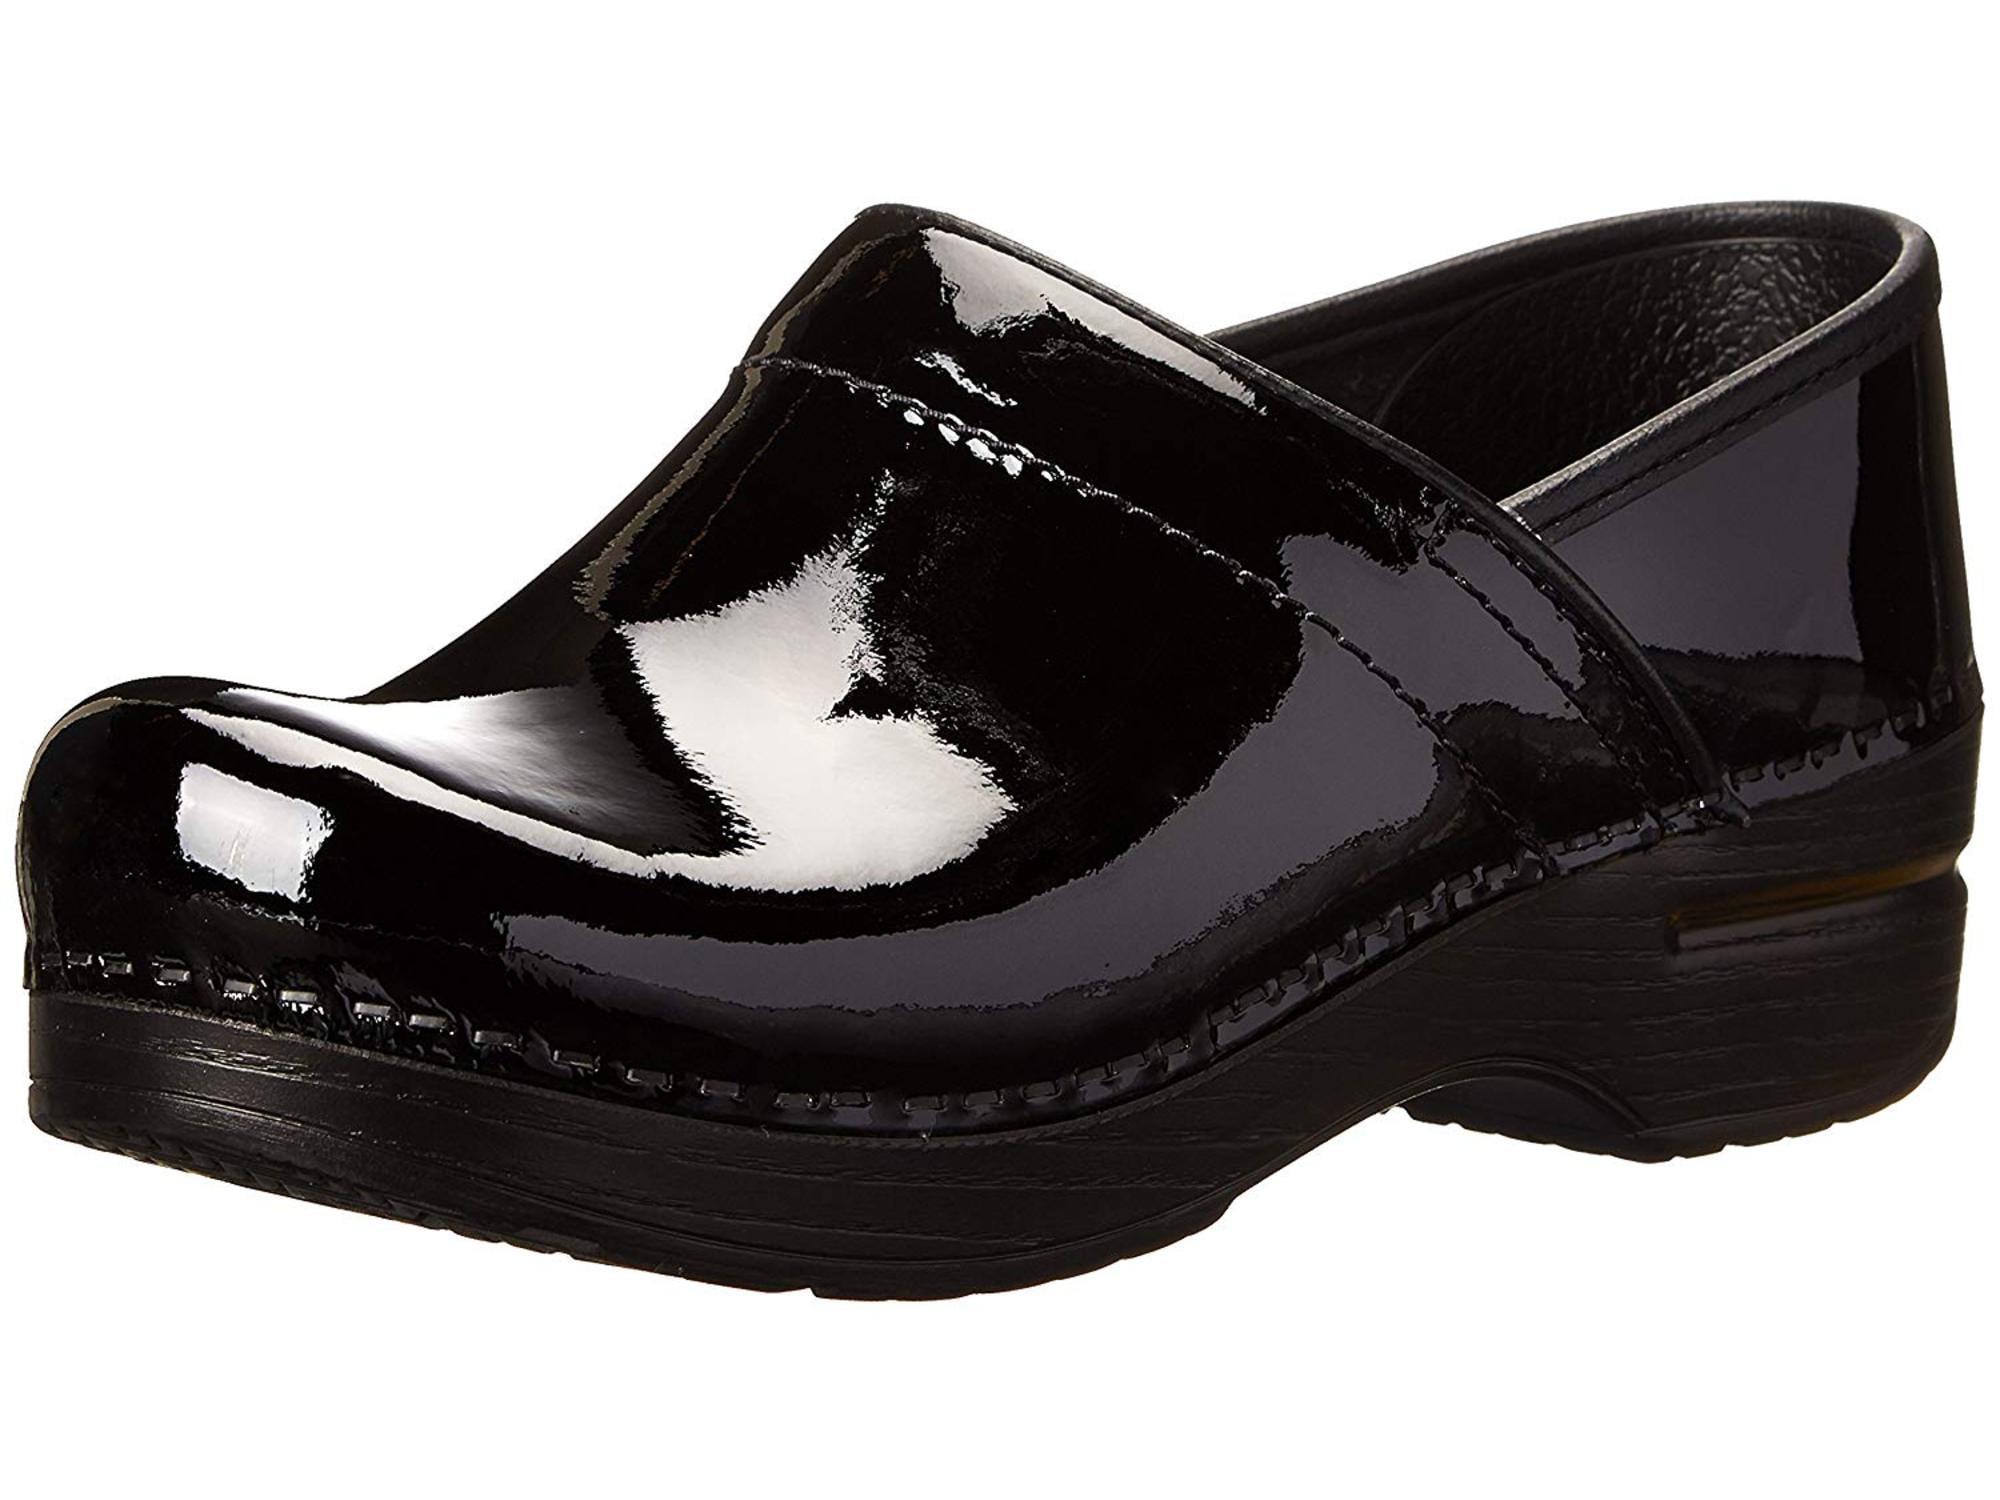 Dansko Womens Professional Leather Closed Toe Clogs, Black Patent, Size